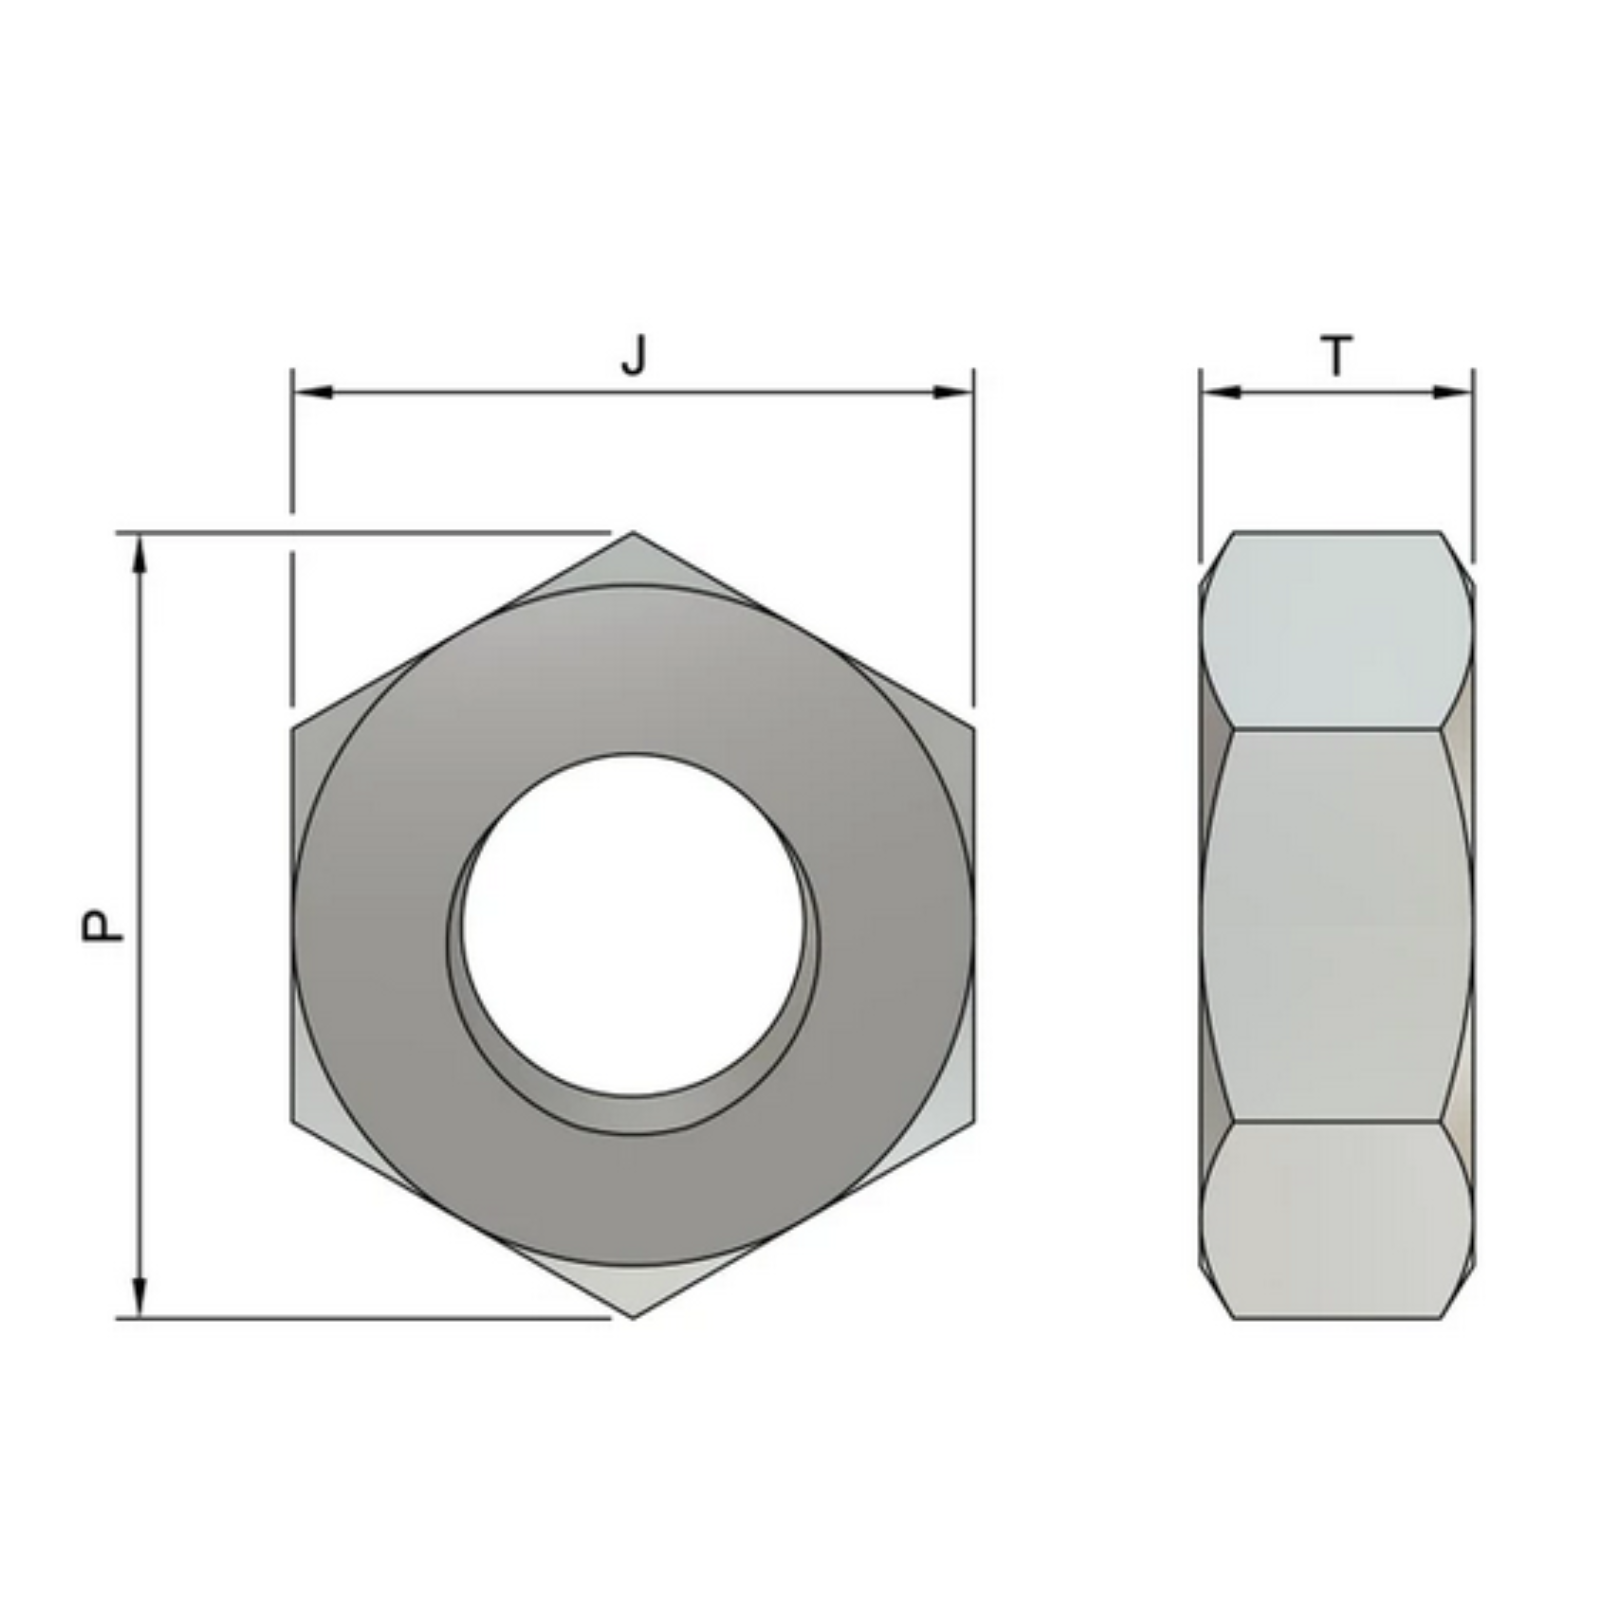 M3 Hexagon Nuts (DIN 934) - Zinc Plated Steel